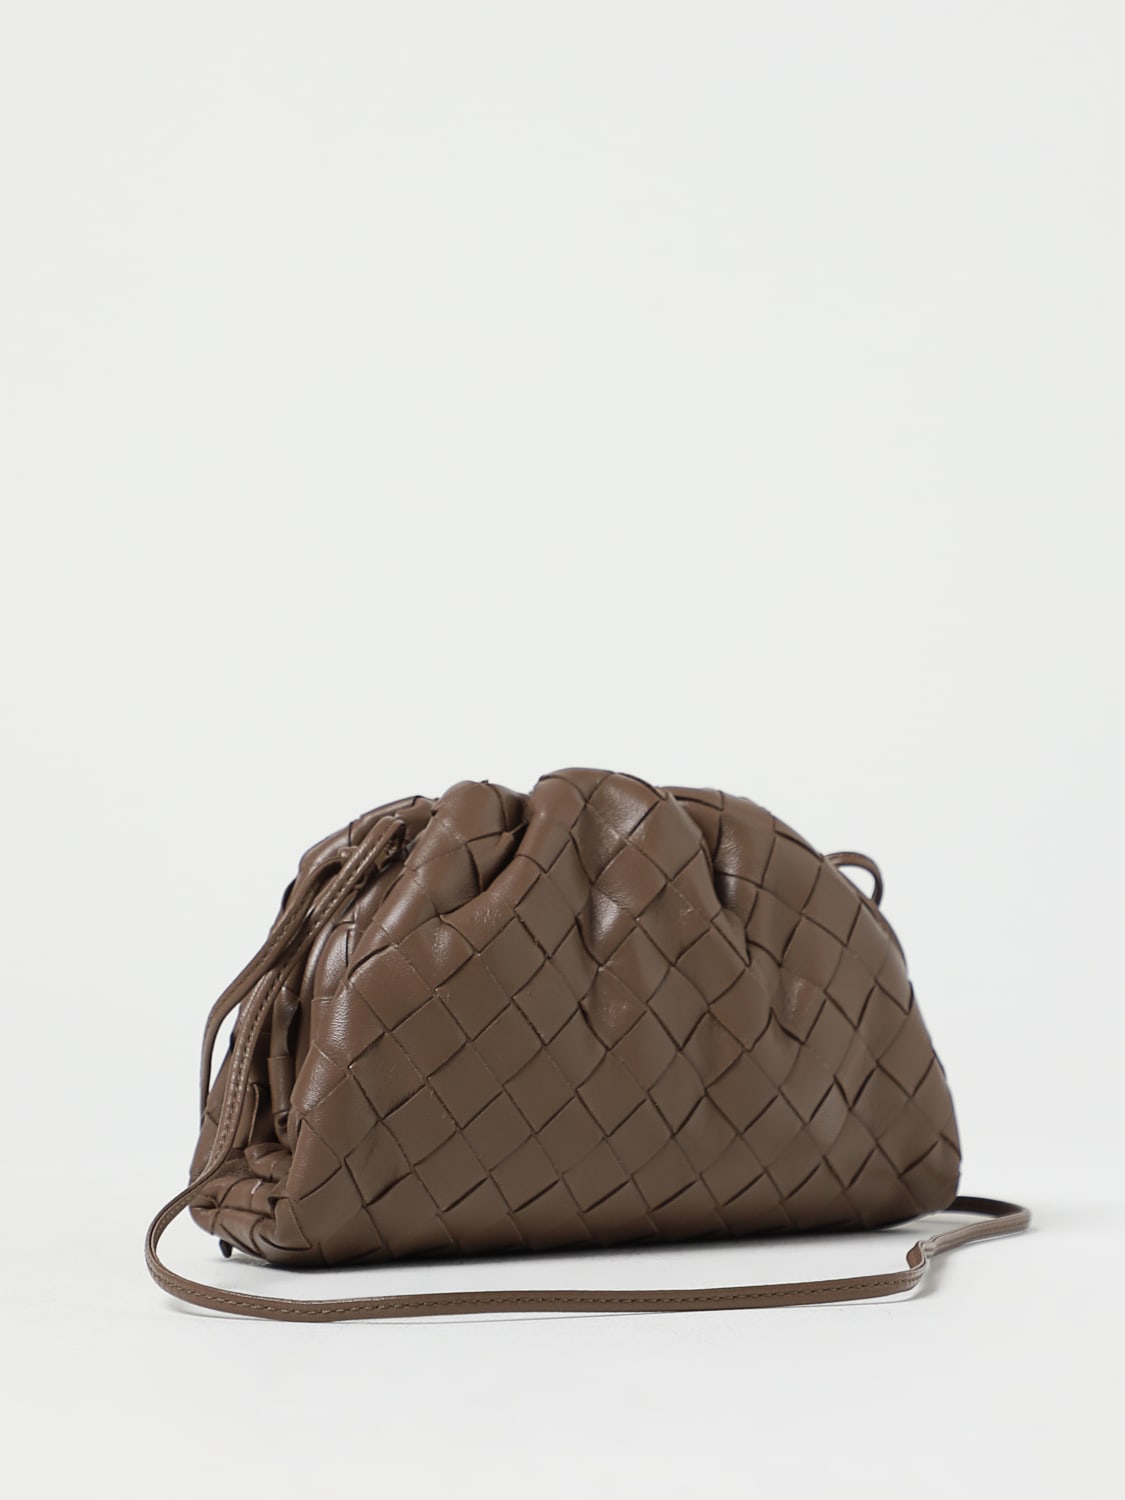 BOTTEGA VENETA: clutch in woven leather - Dove Grey | Bottega